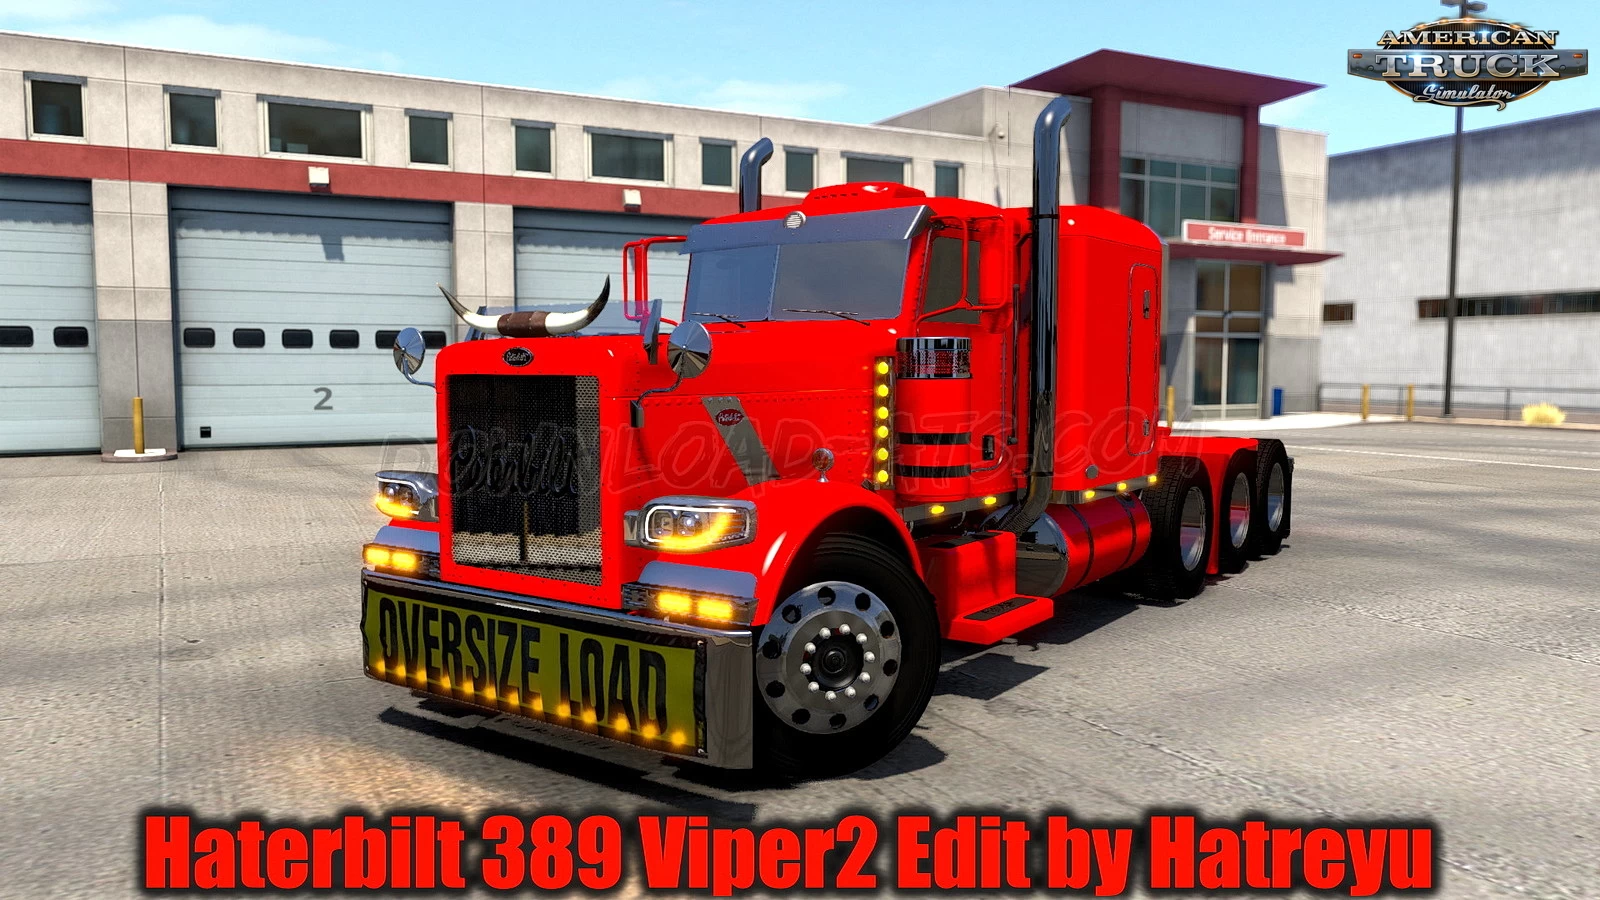 Haterbilt 389 Viper2 v1.5.1 Edit by Hatreyu (1.39.x) for ATS